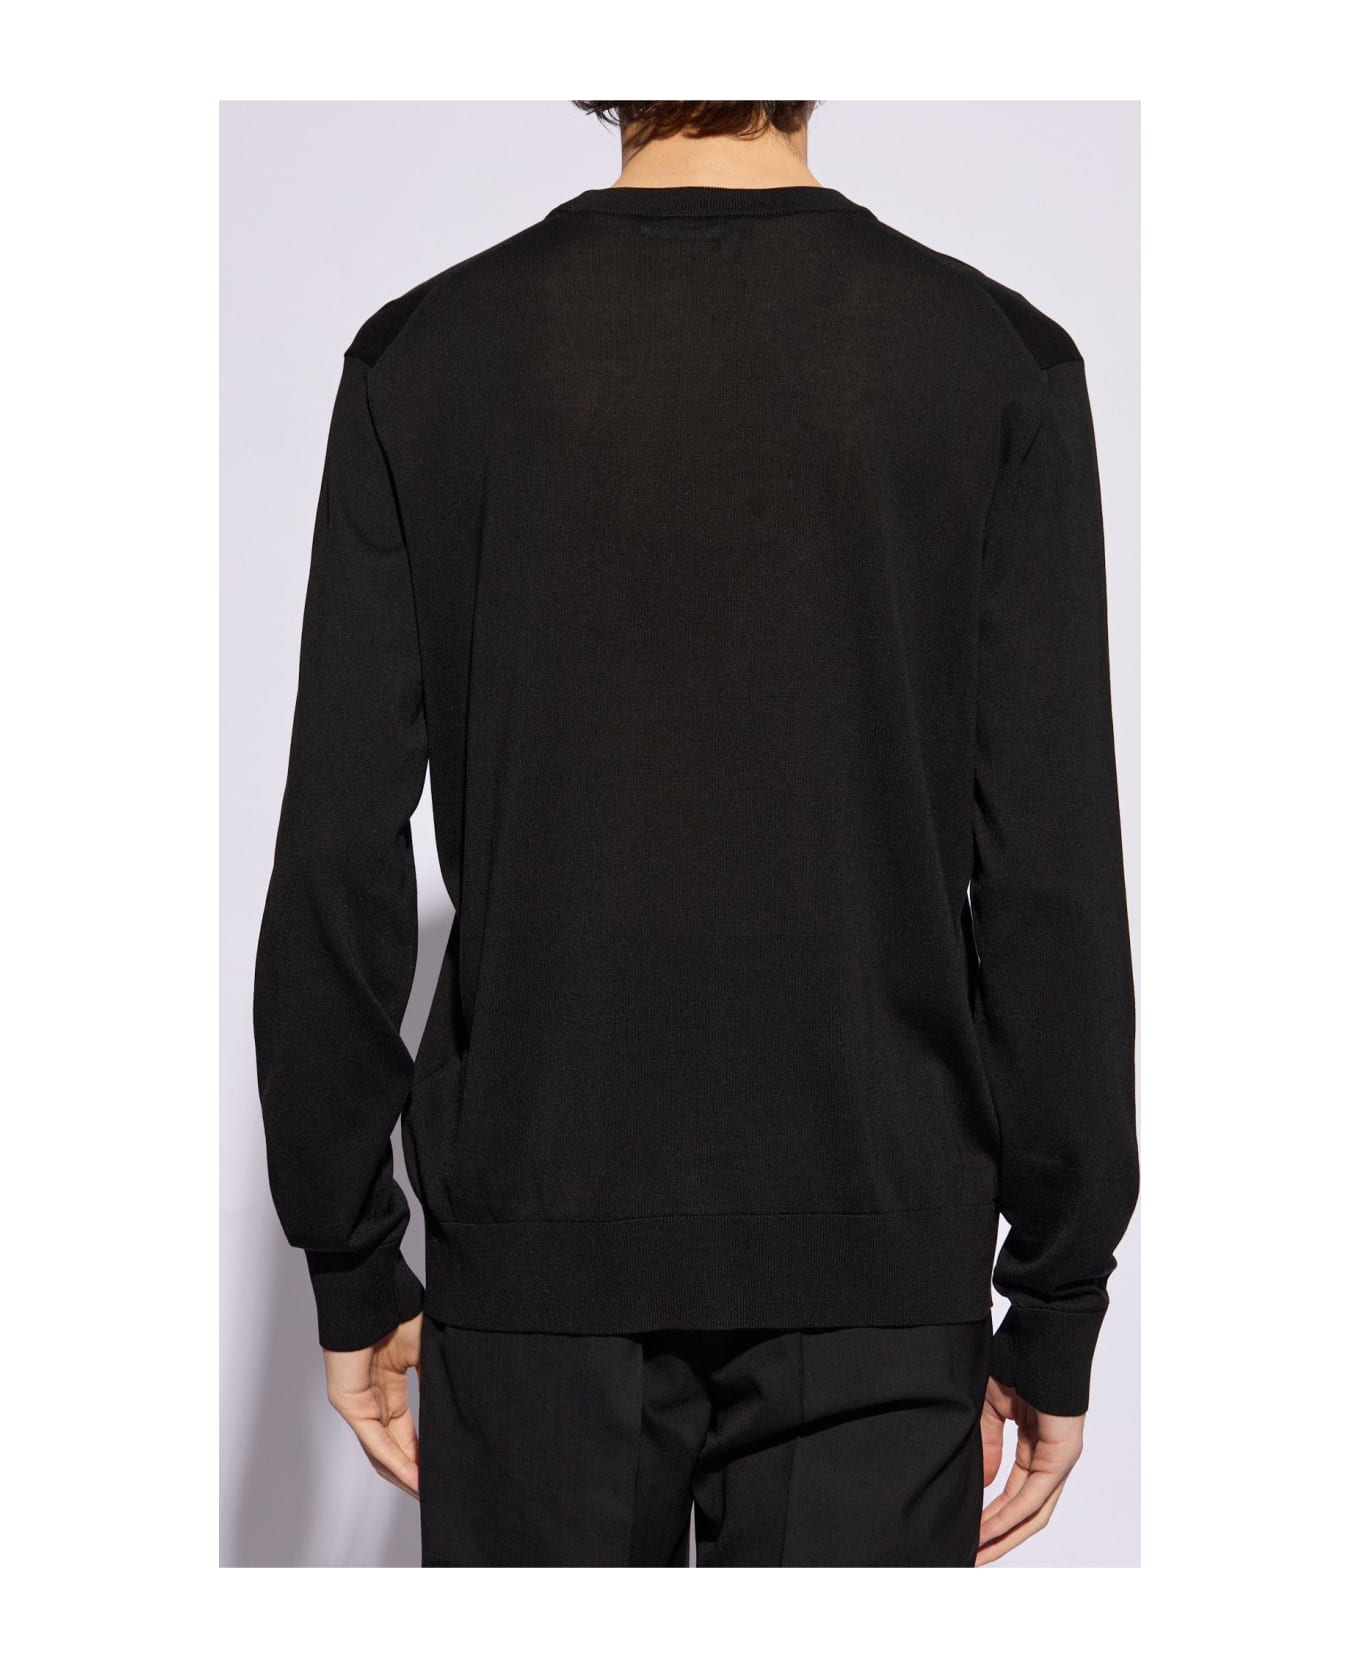 Versace Embroidered Sweater - Nero ニットウェア